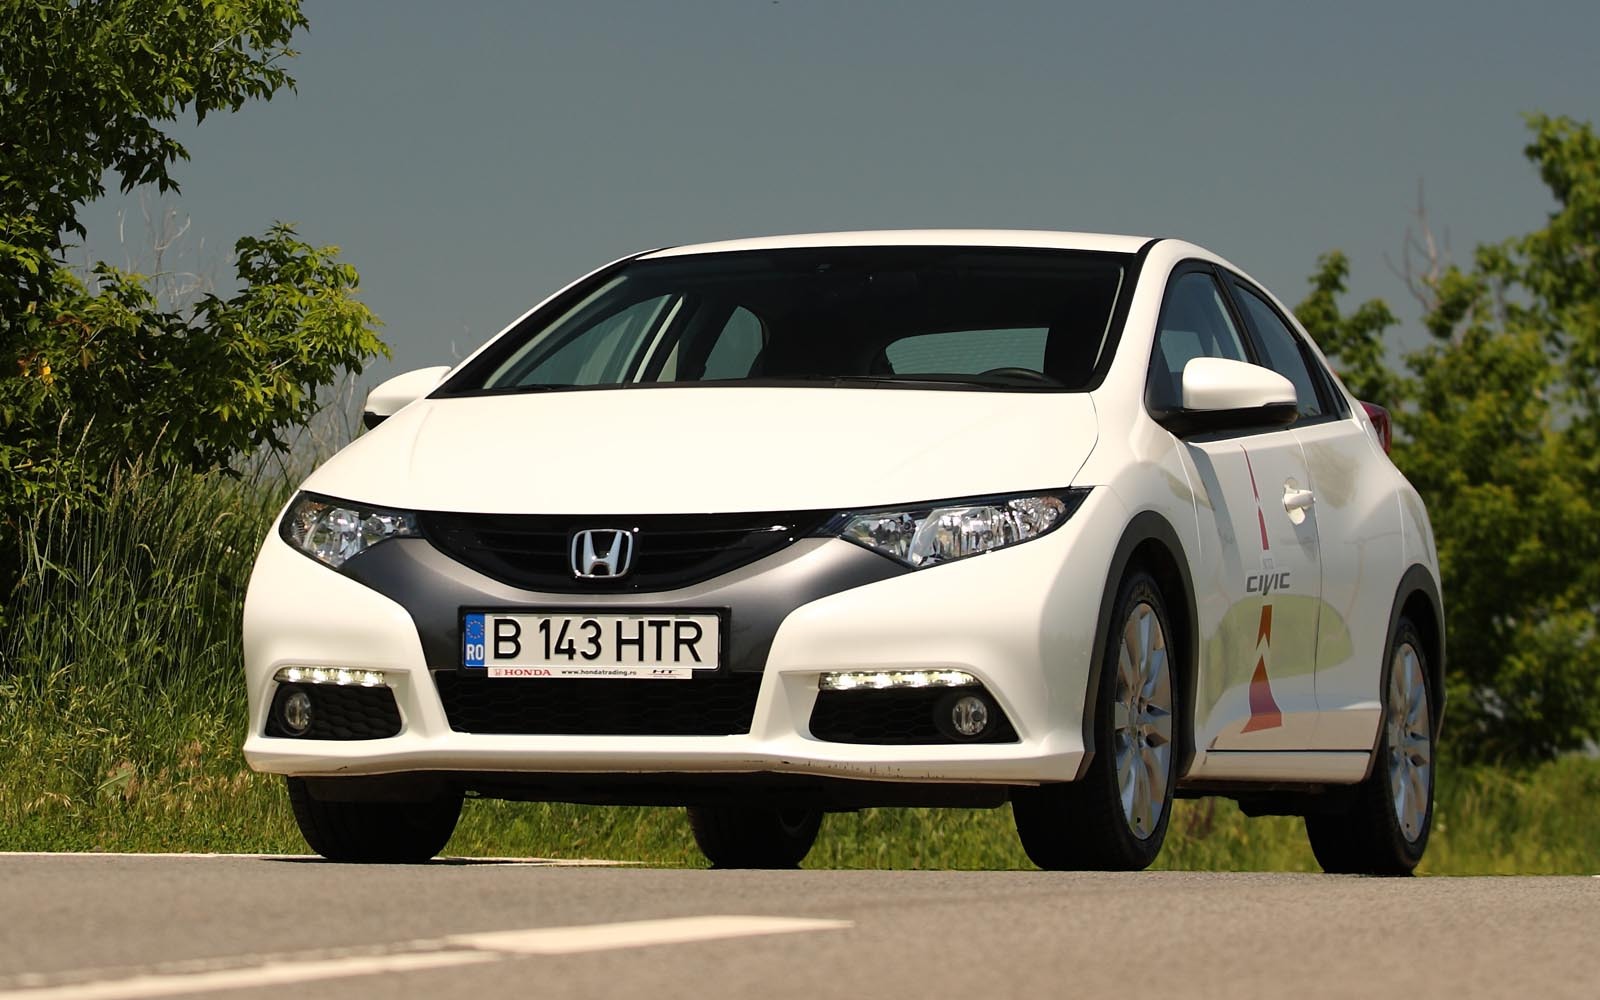 Honda Civic ramane fara dubii cea mai avangardista propunere din segmentul compactelor